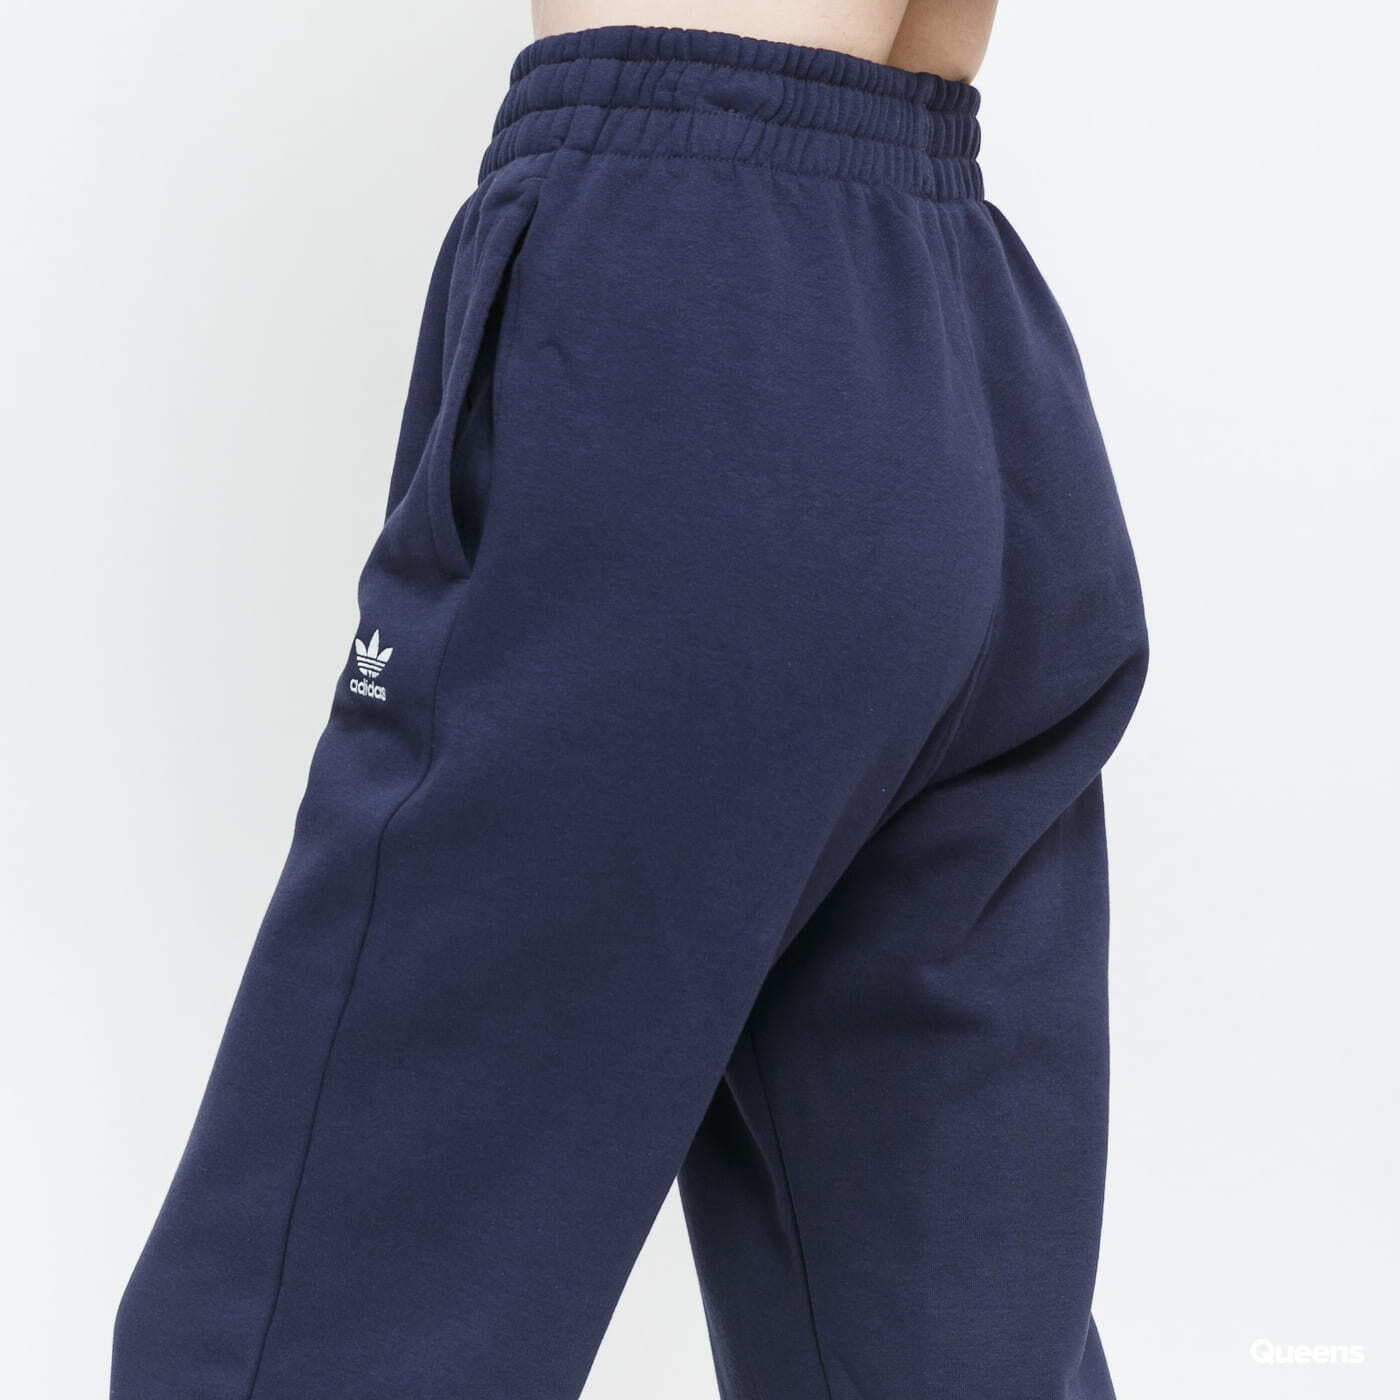 NWT adidas Originals EQT Warm Up Wind Pants Joggers Trousers DH5149 NAVY  BLUE XS